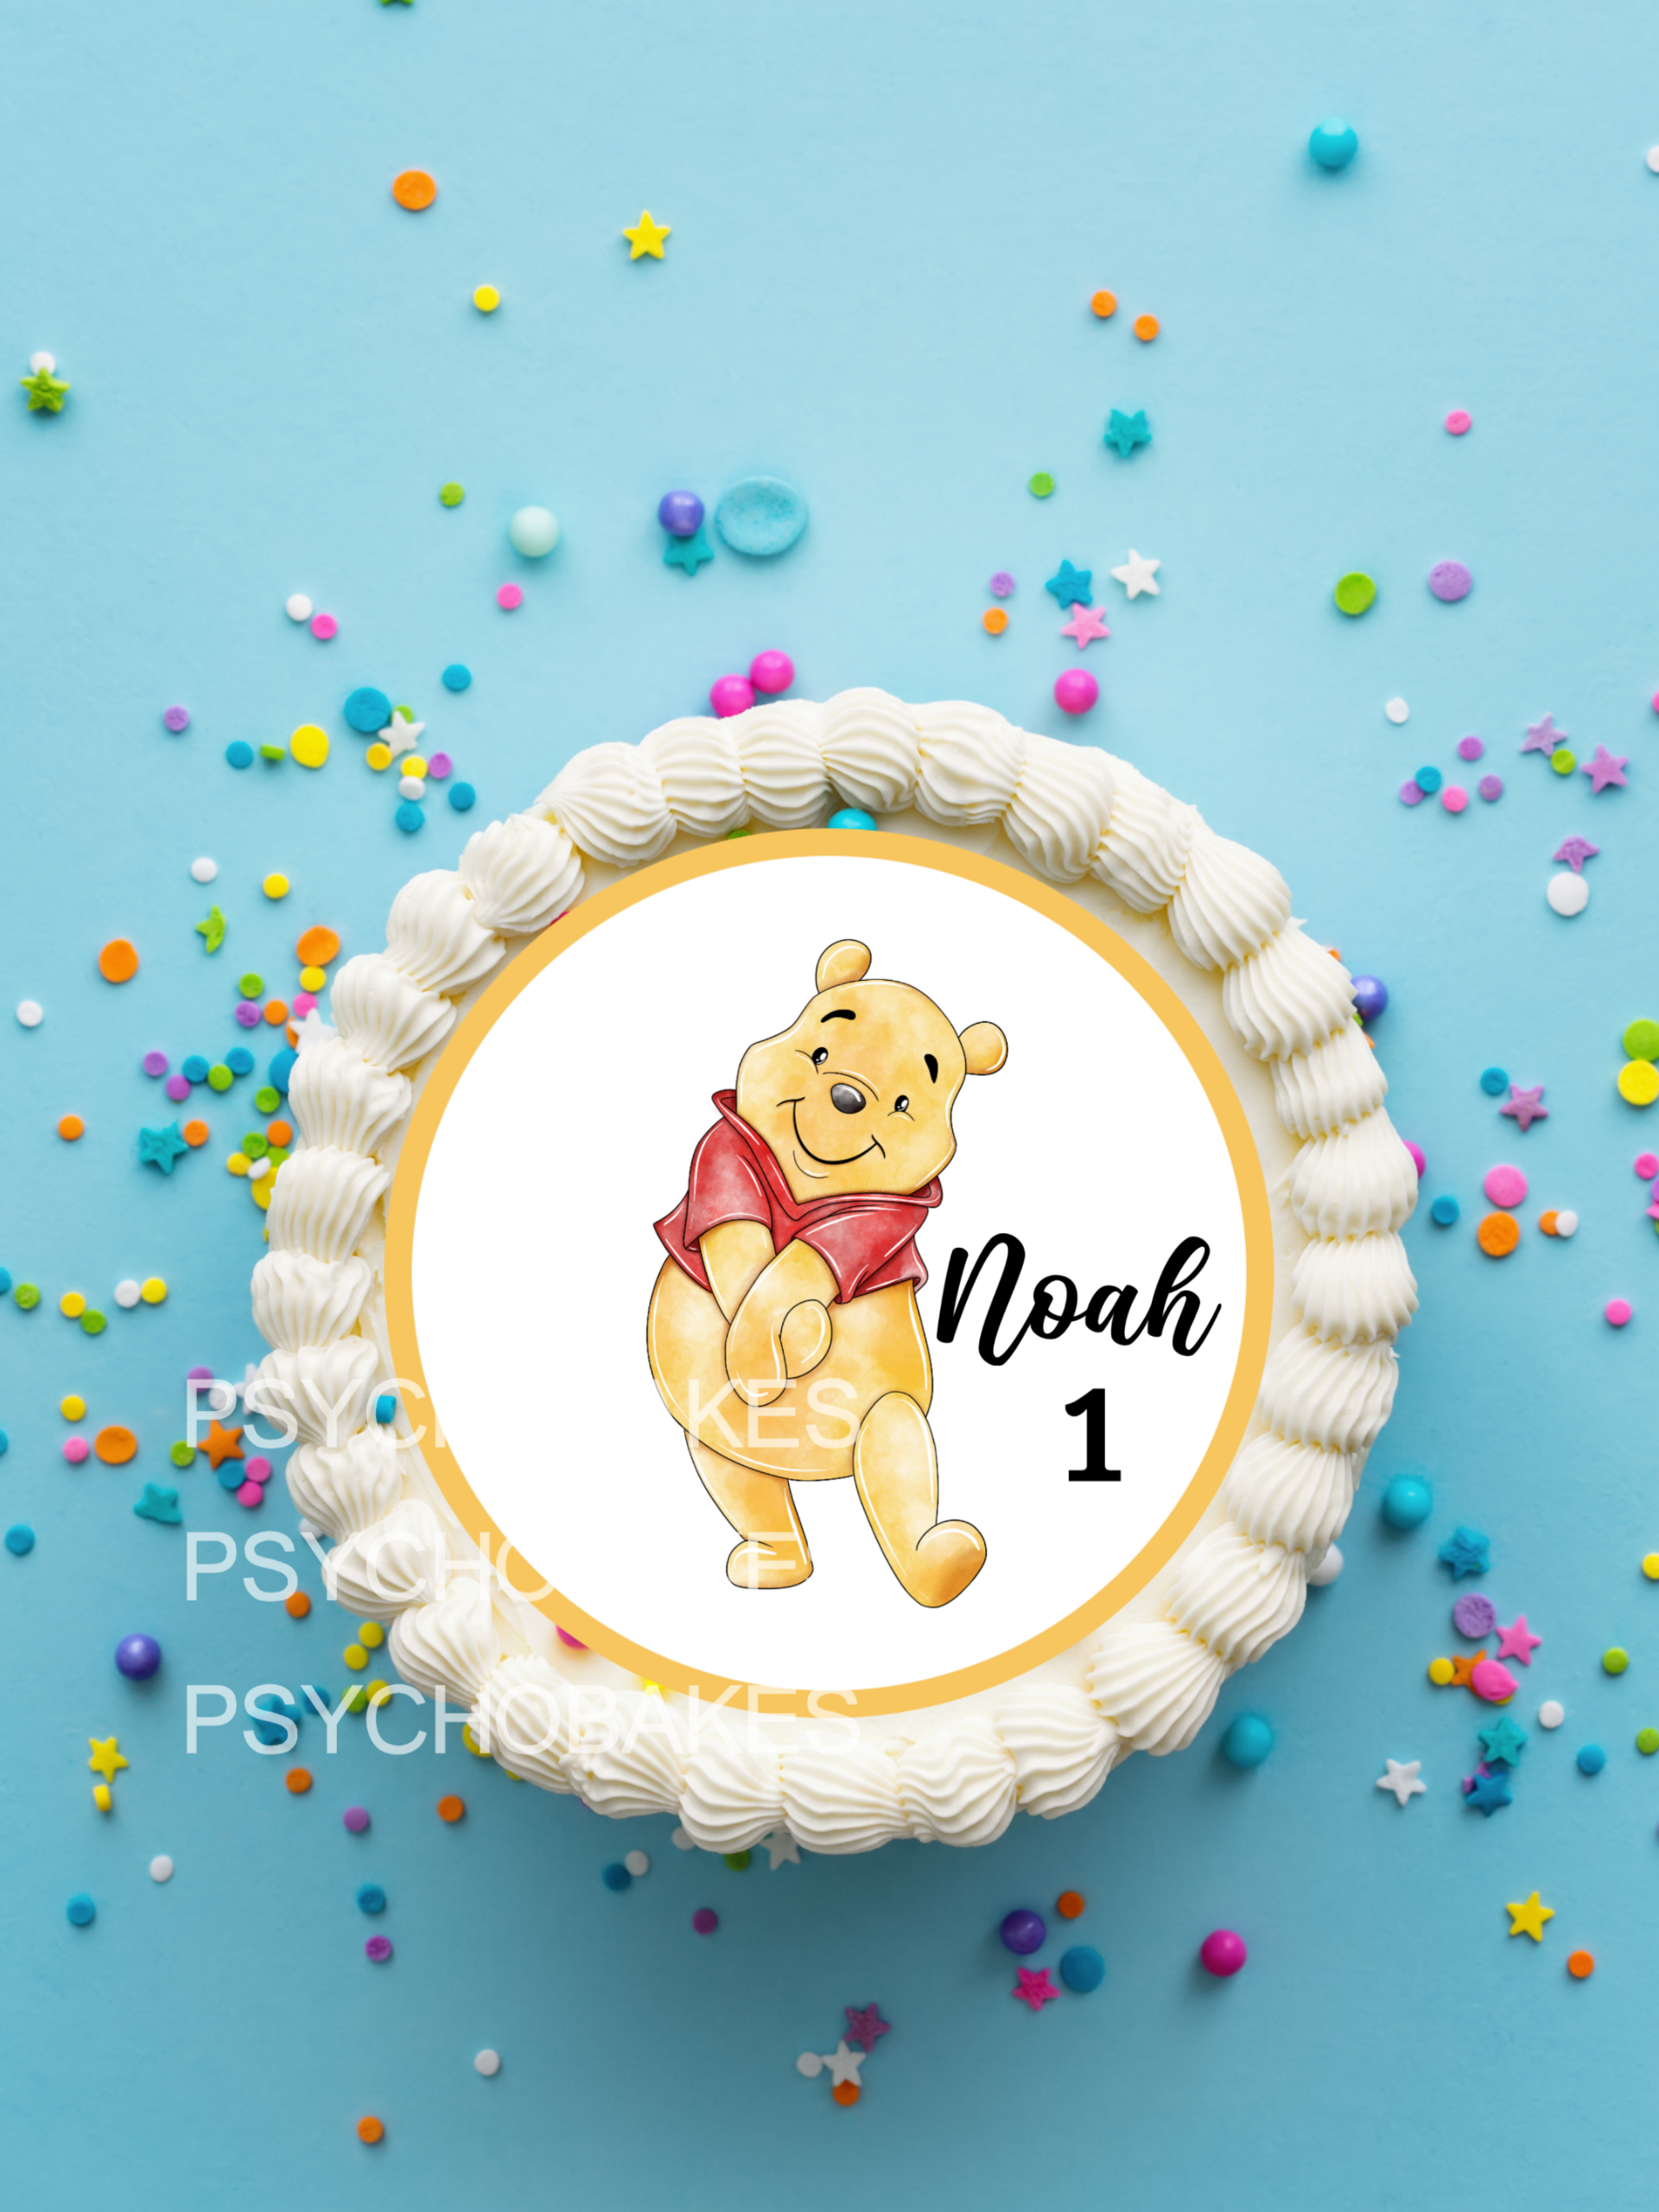 Winnie the pooh edible cake topper